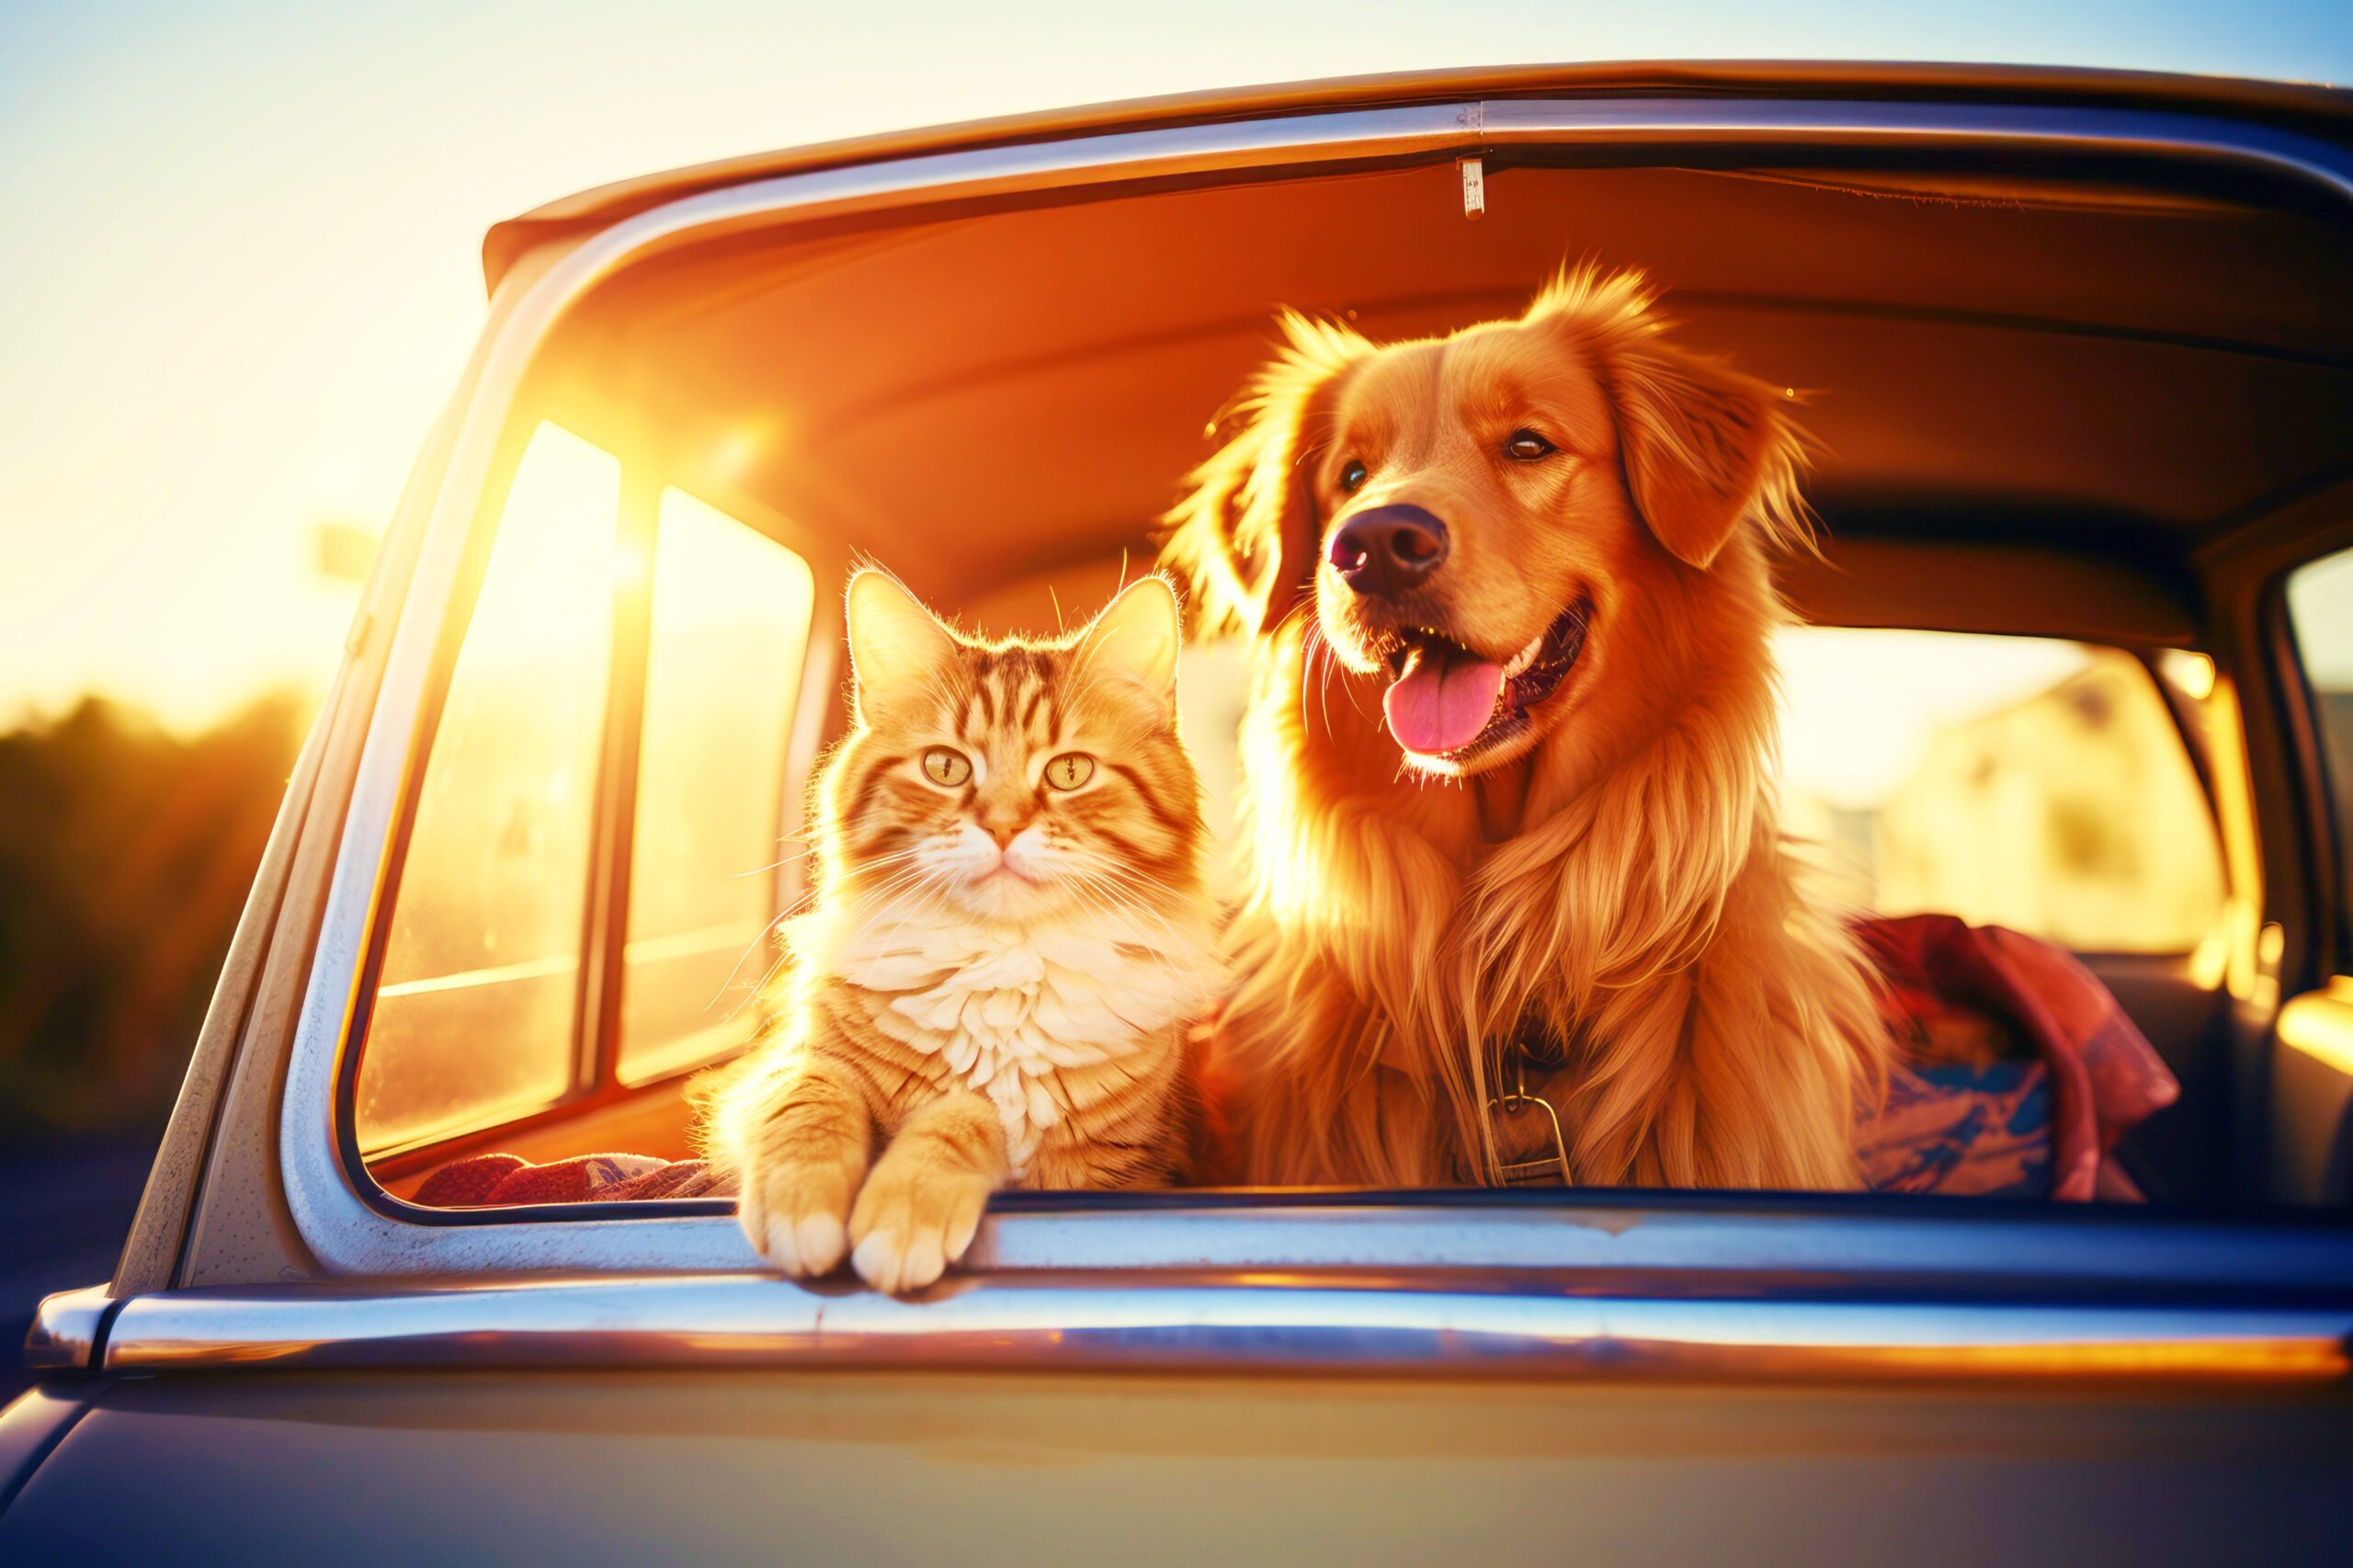 <img src="happy.jpg" alt="happy cat and dog on road trip/>